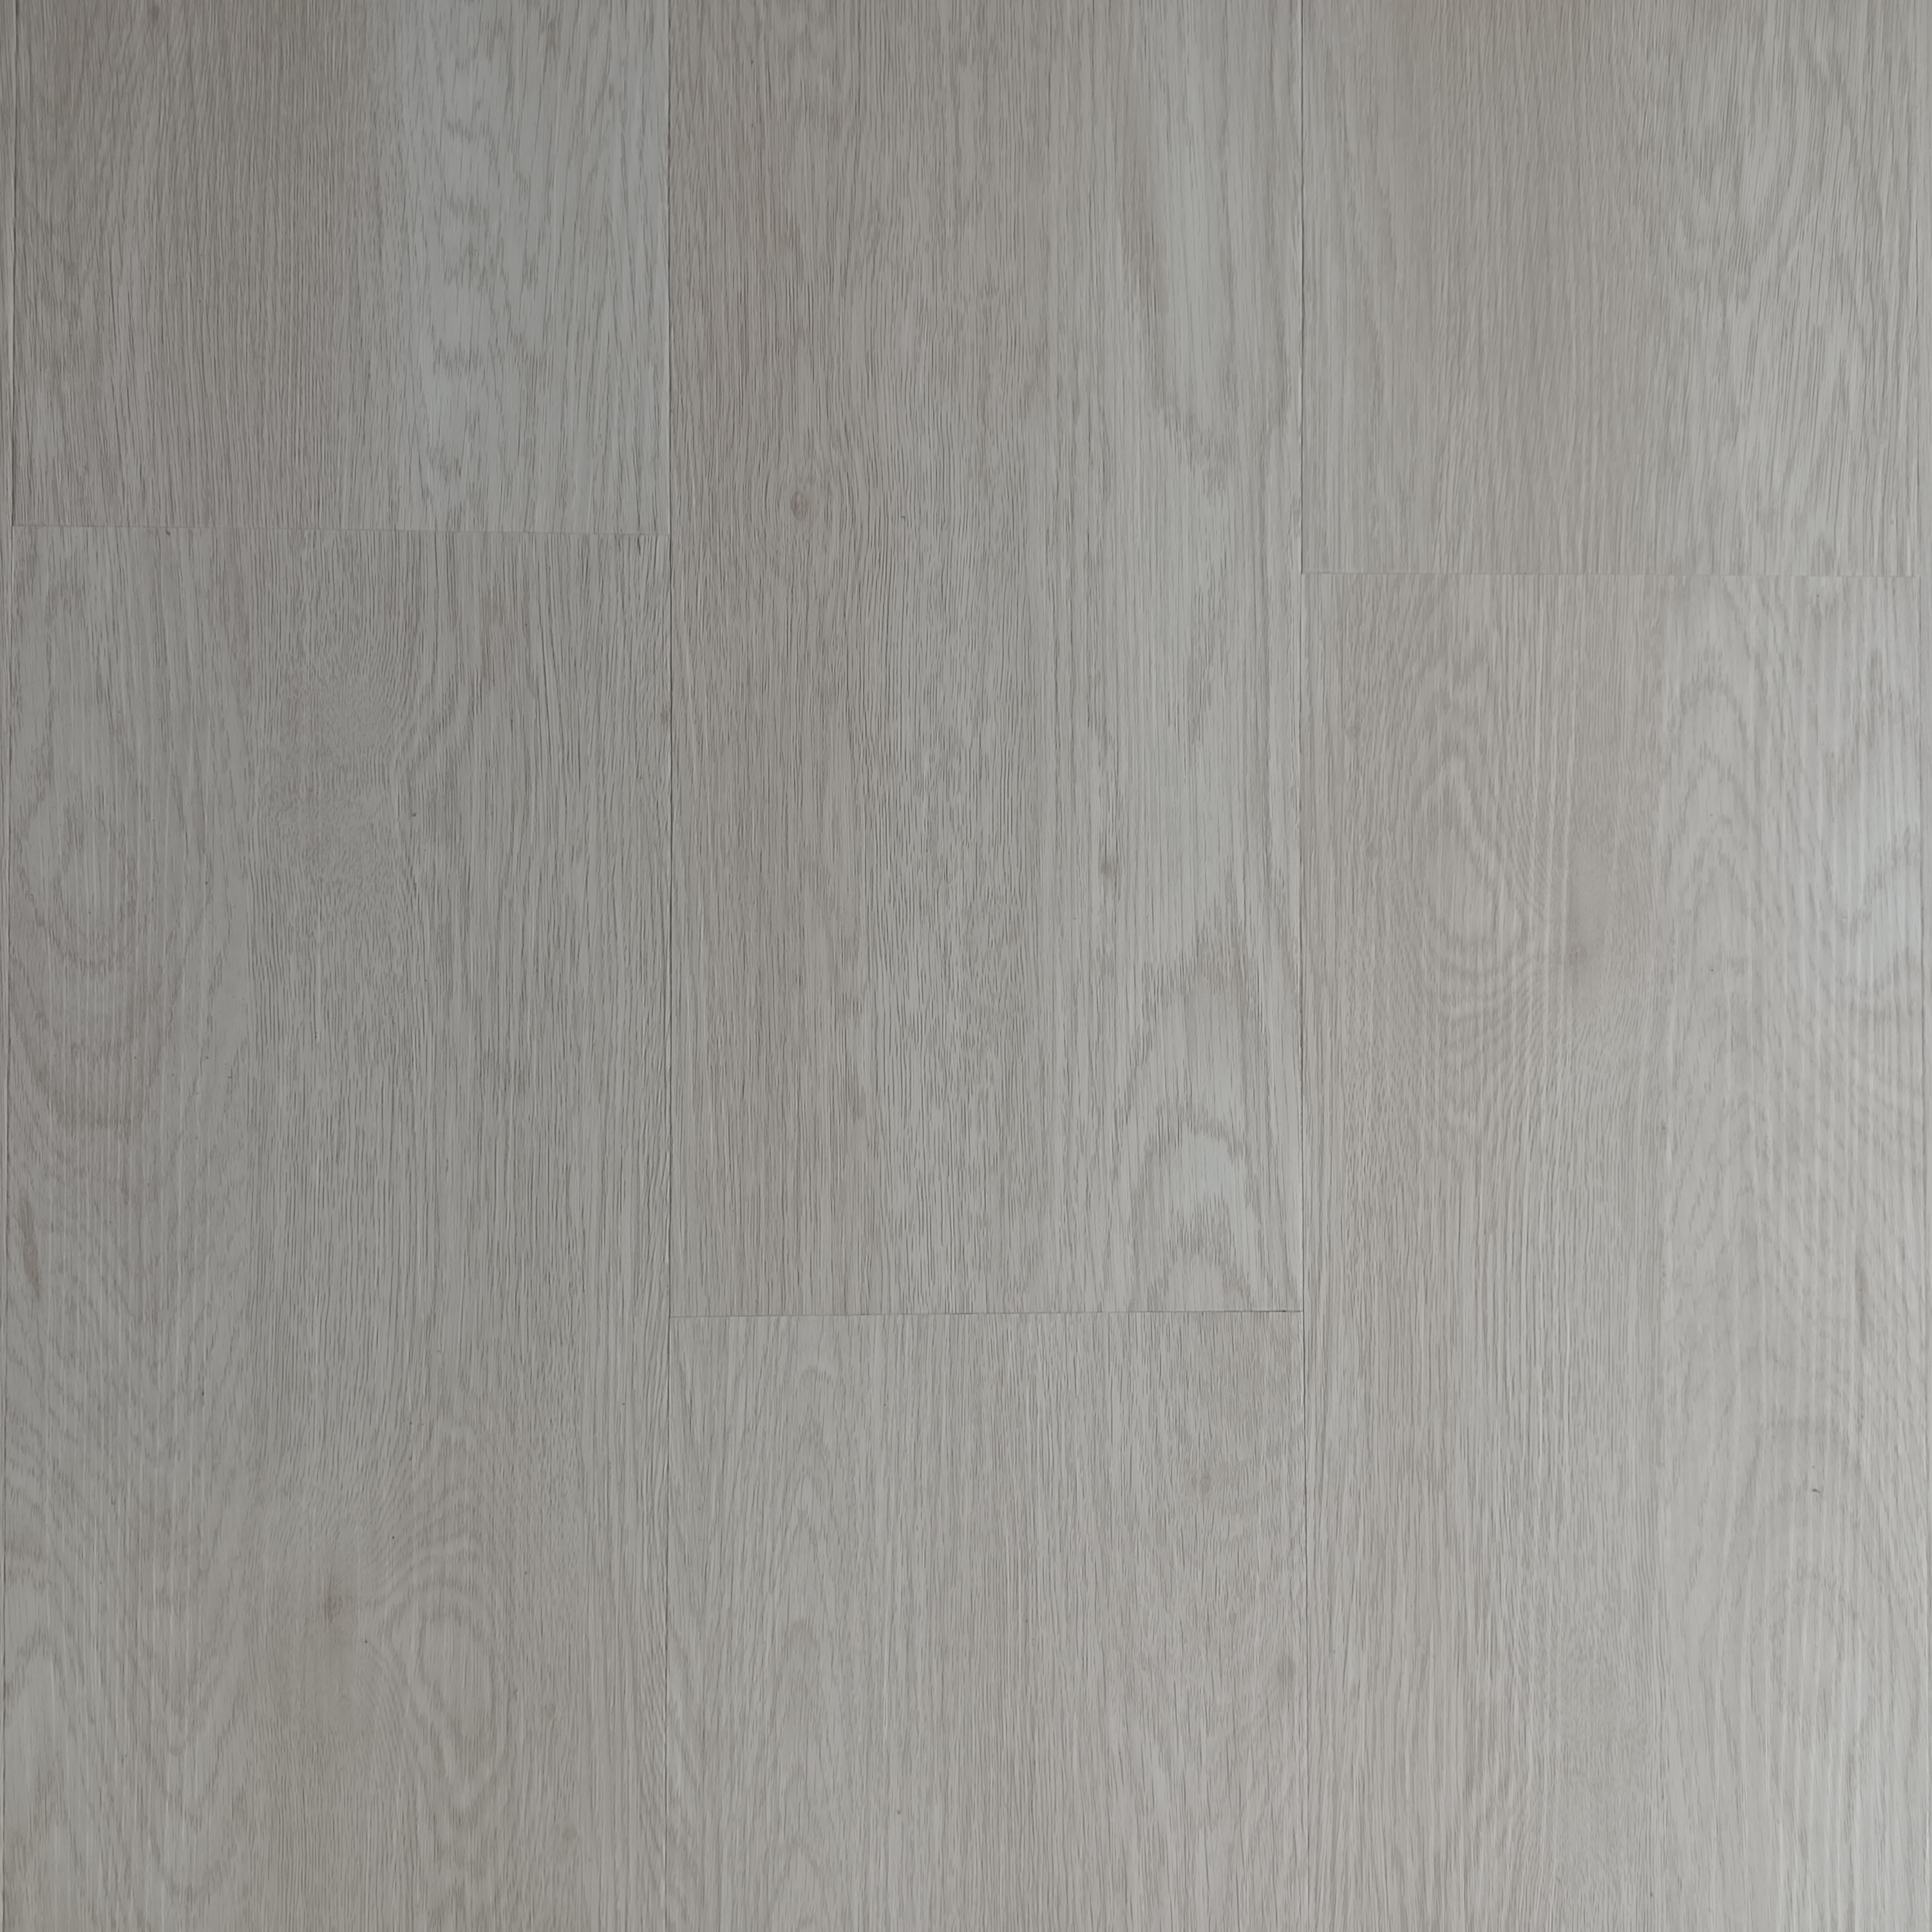 Discountable price Anti Static Vinyl Flooring -
 Hot Sale Wooden Grain Rigid SPC Flooring Waterproof Vinyl Planks Flooring – Kangton